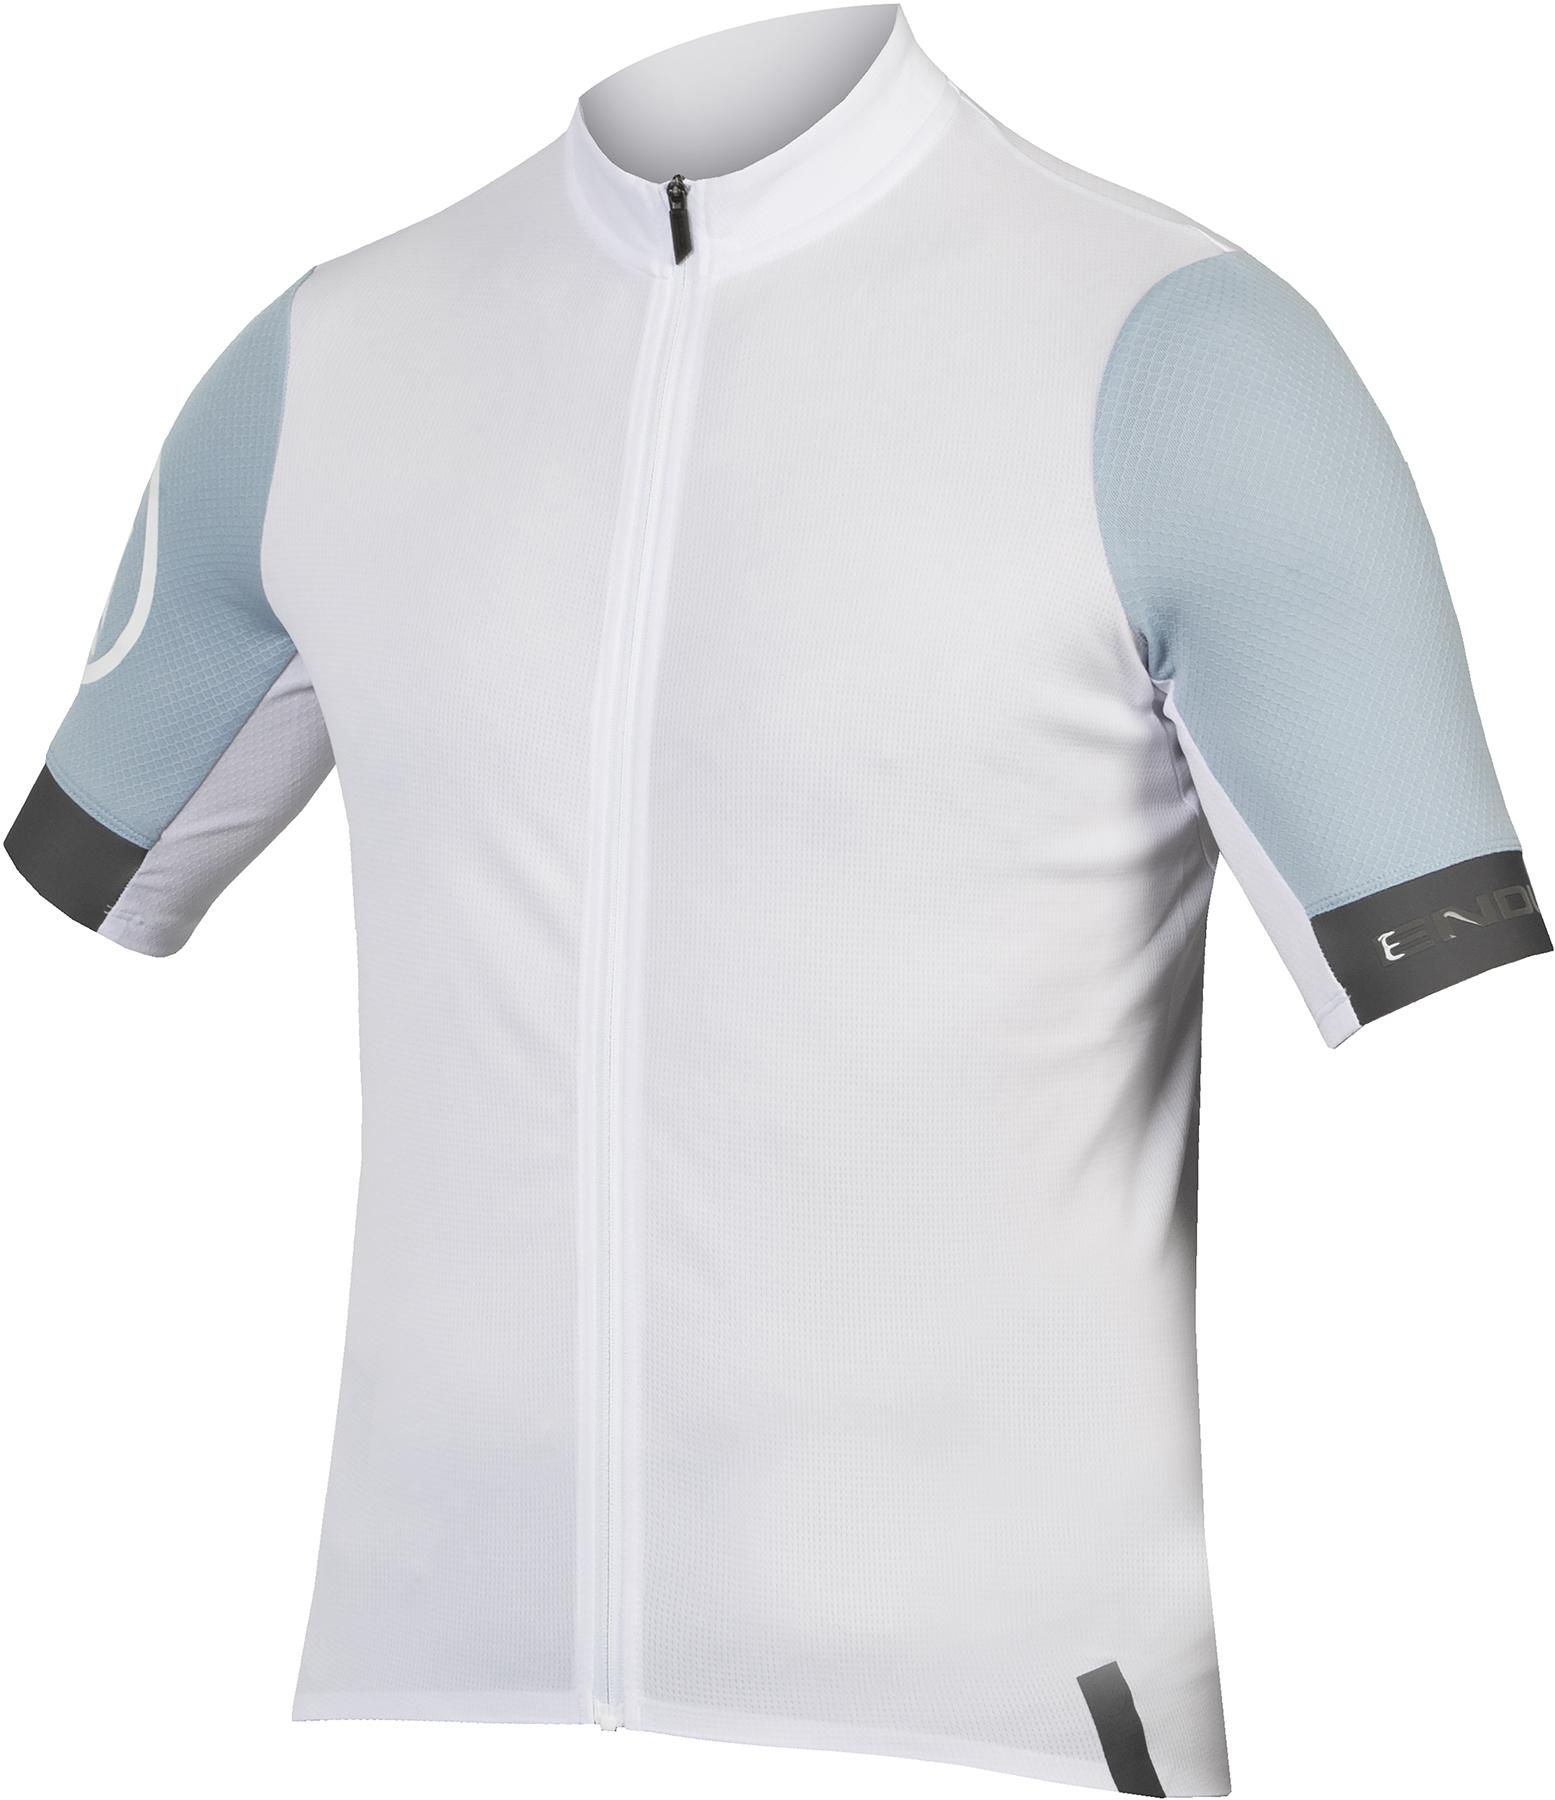 Endura Fs260 Short Sleeve Cycling Jersey - White